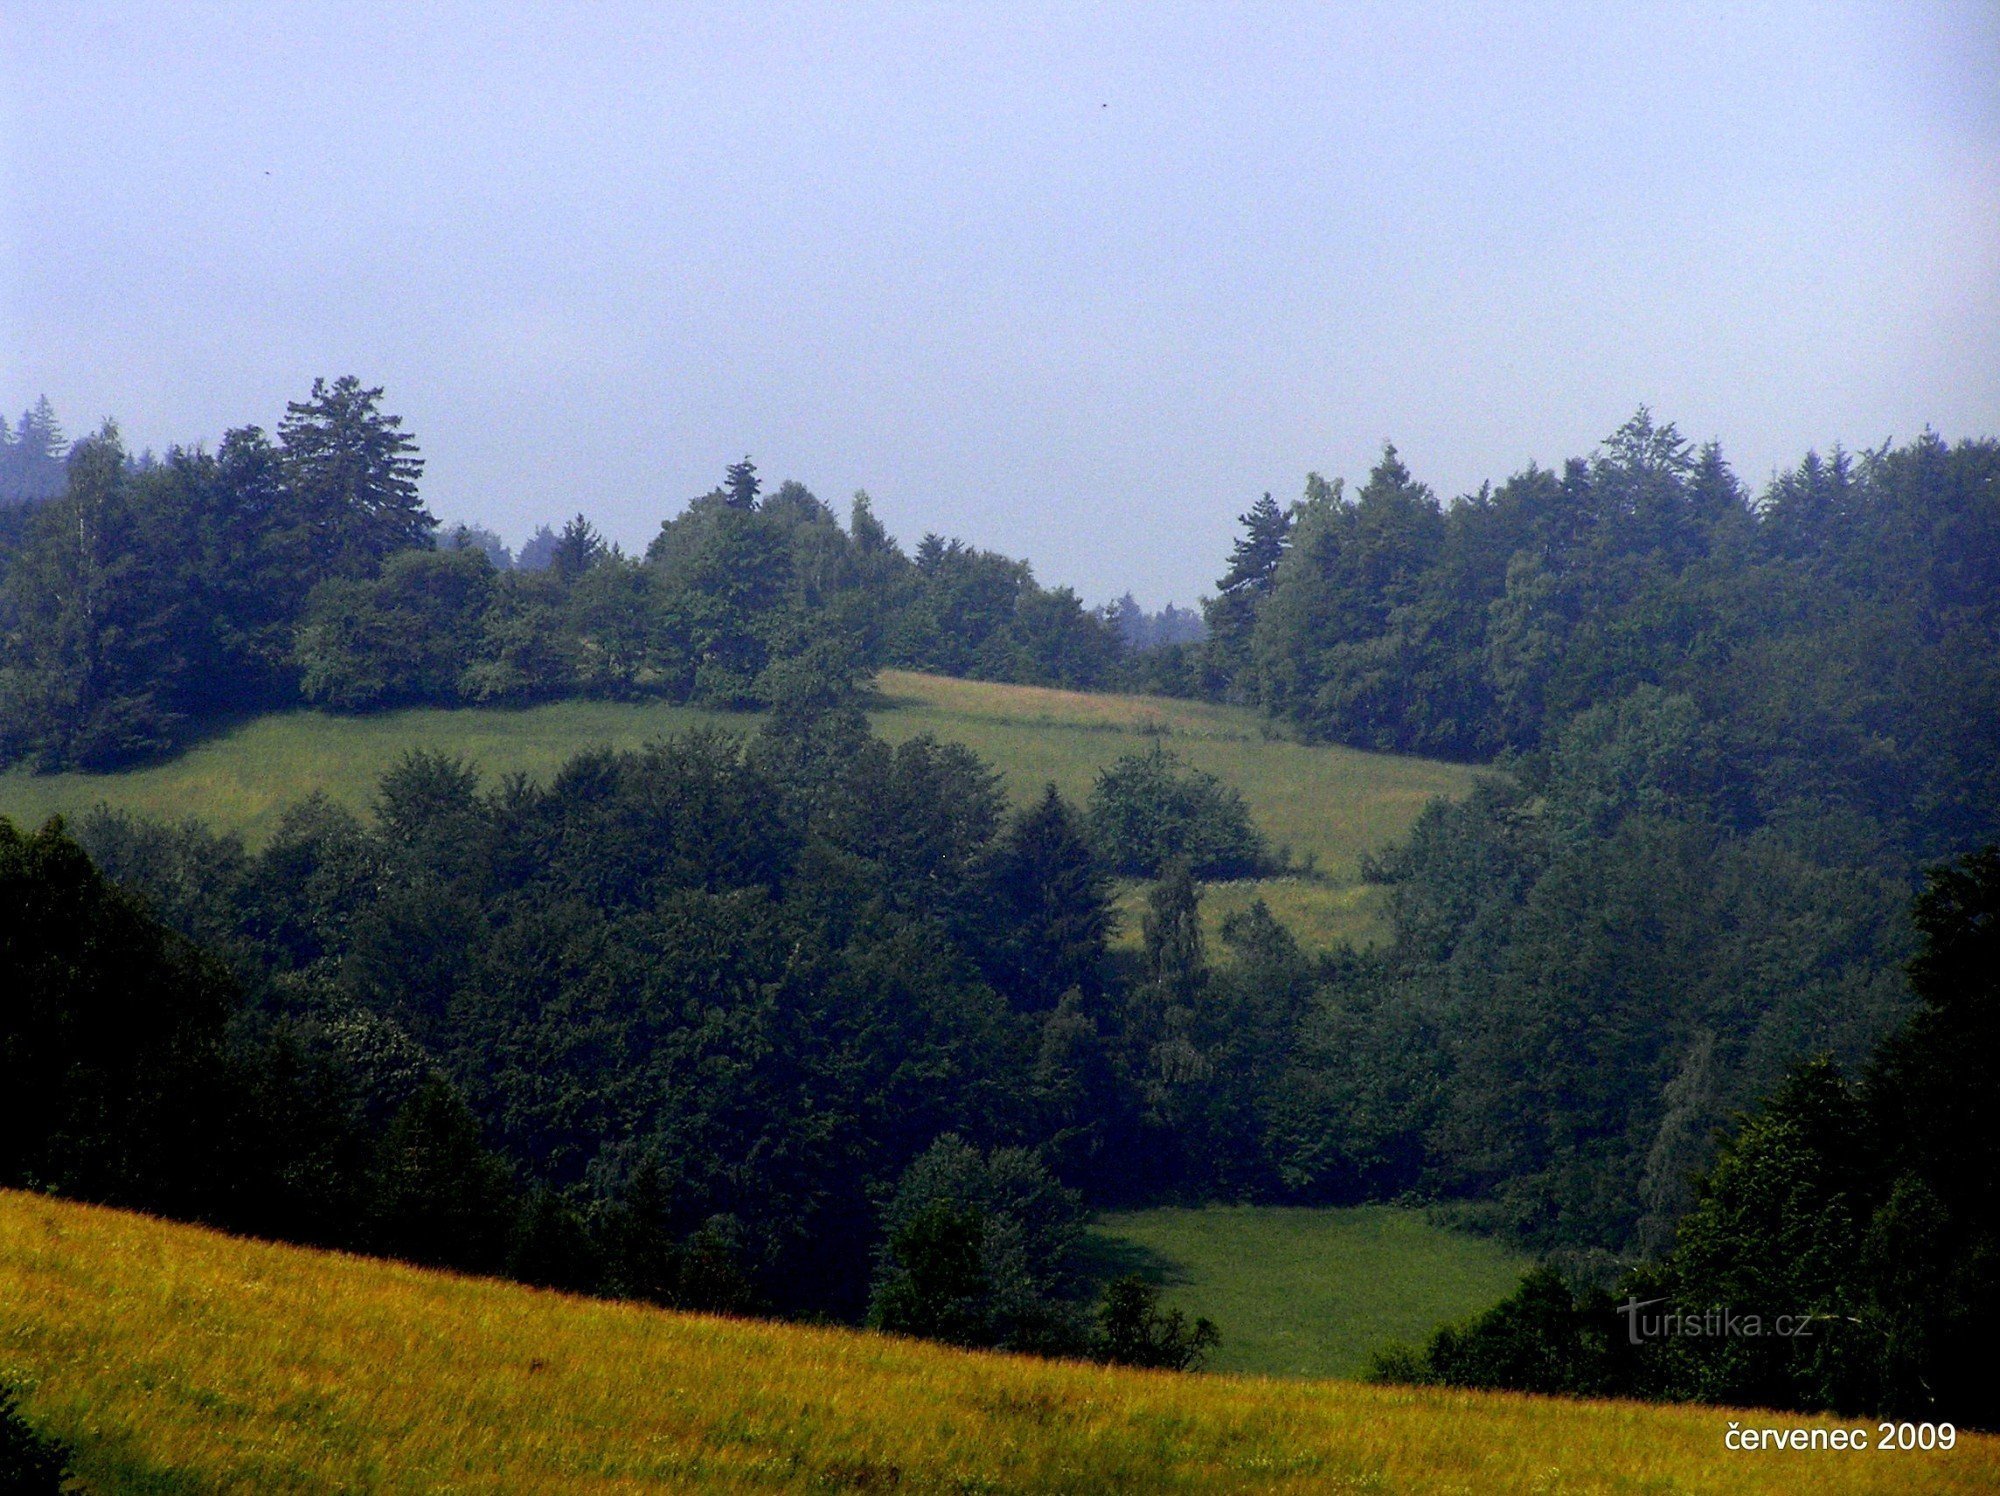 PP Stříbrník (widok z siodła Stříbrník - zoom) (lipiec 2009)